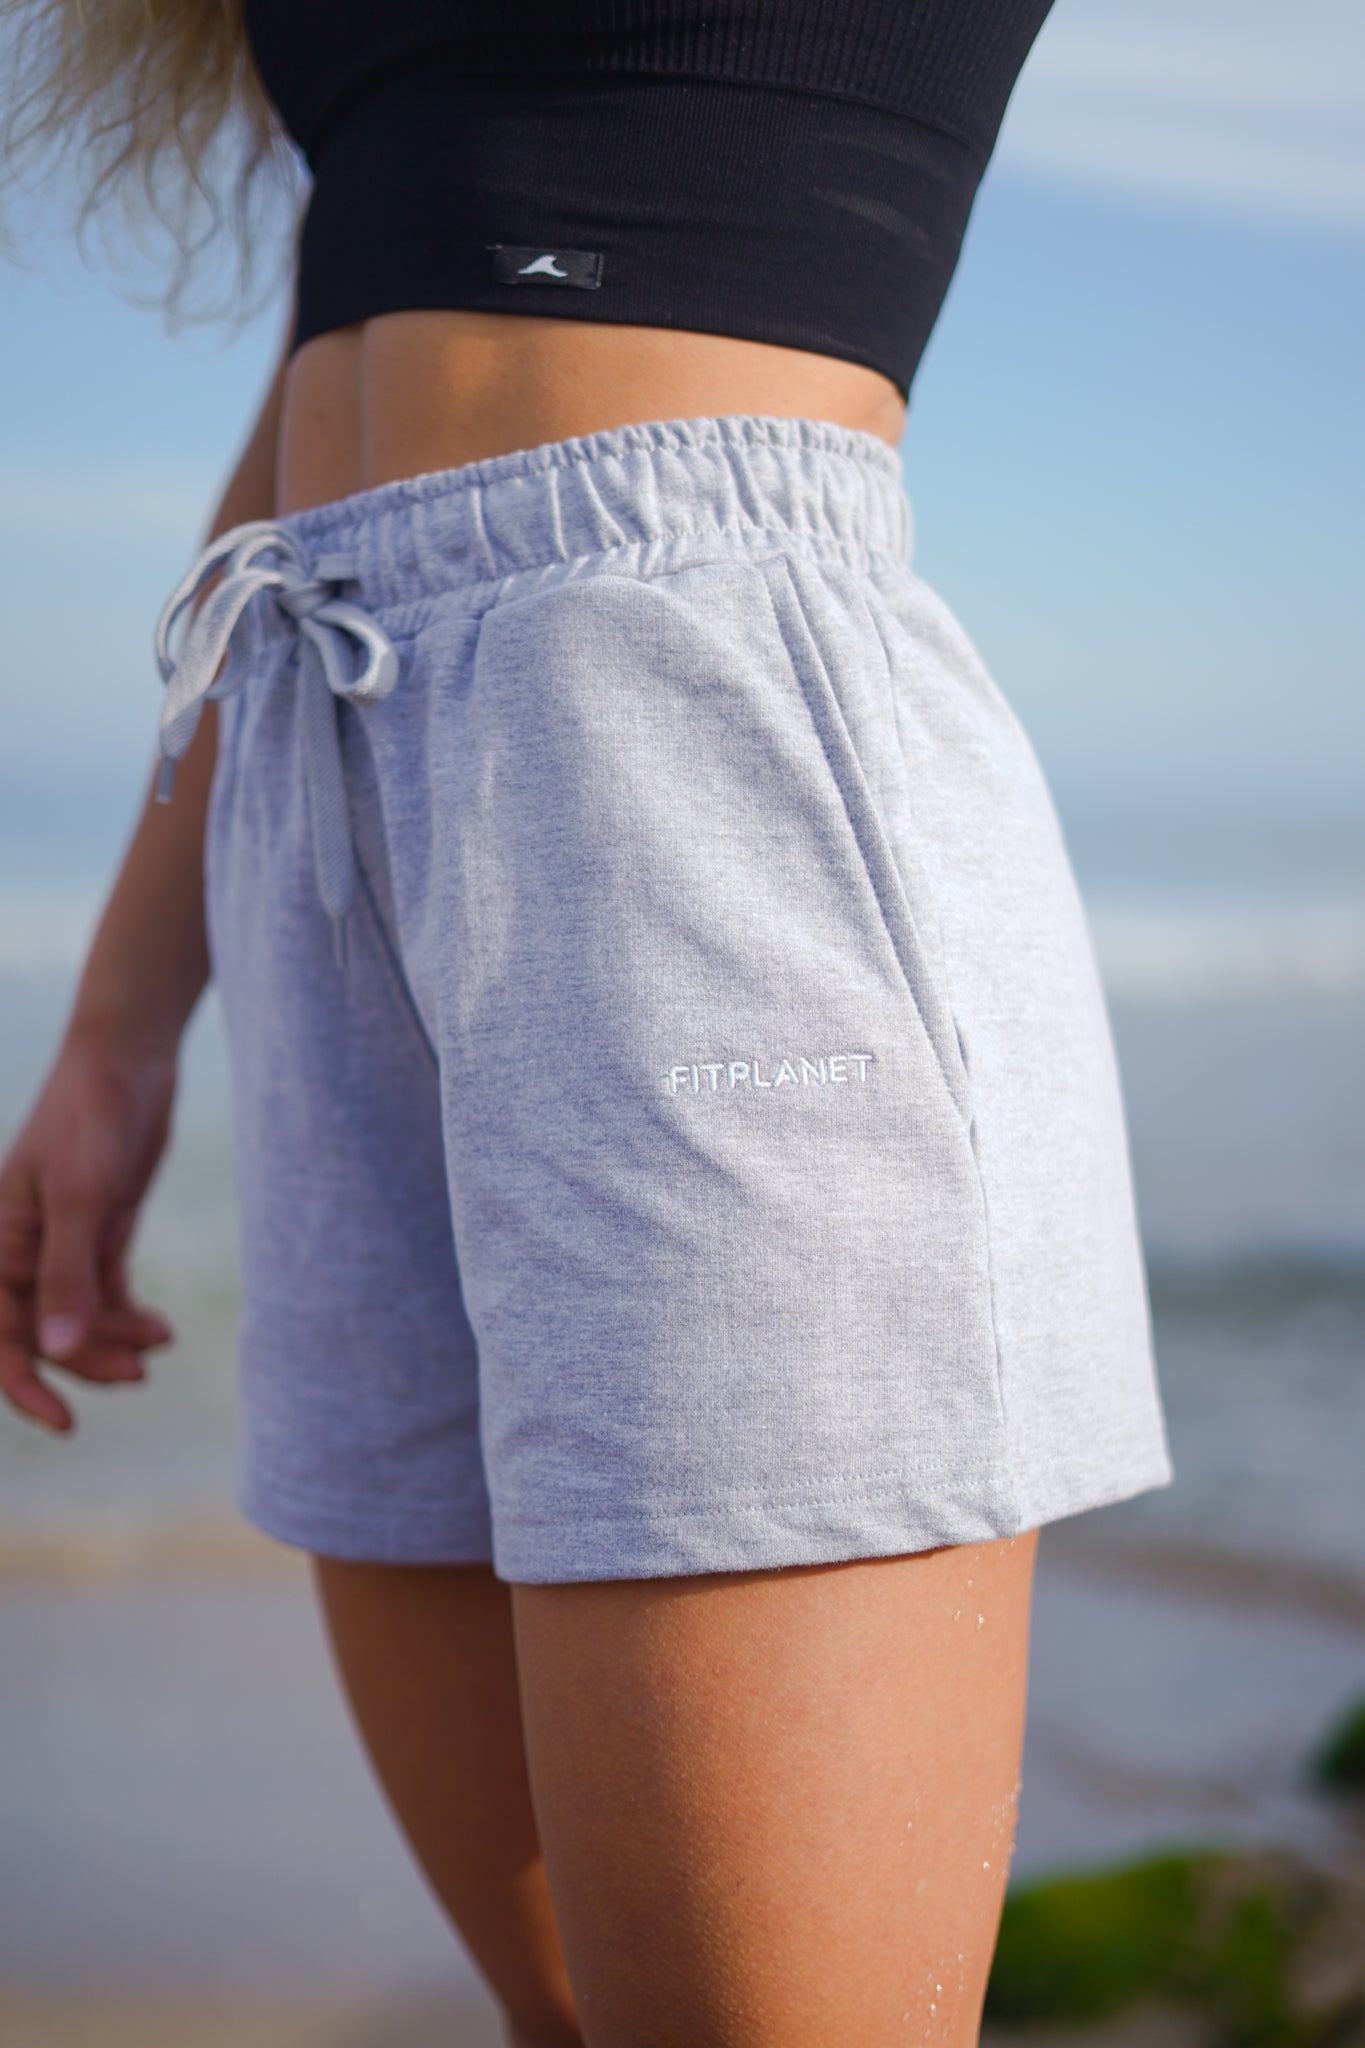 Fitplanet Shorts - Gray